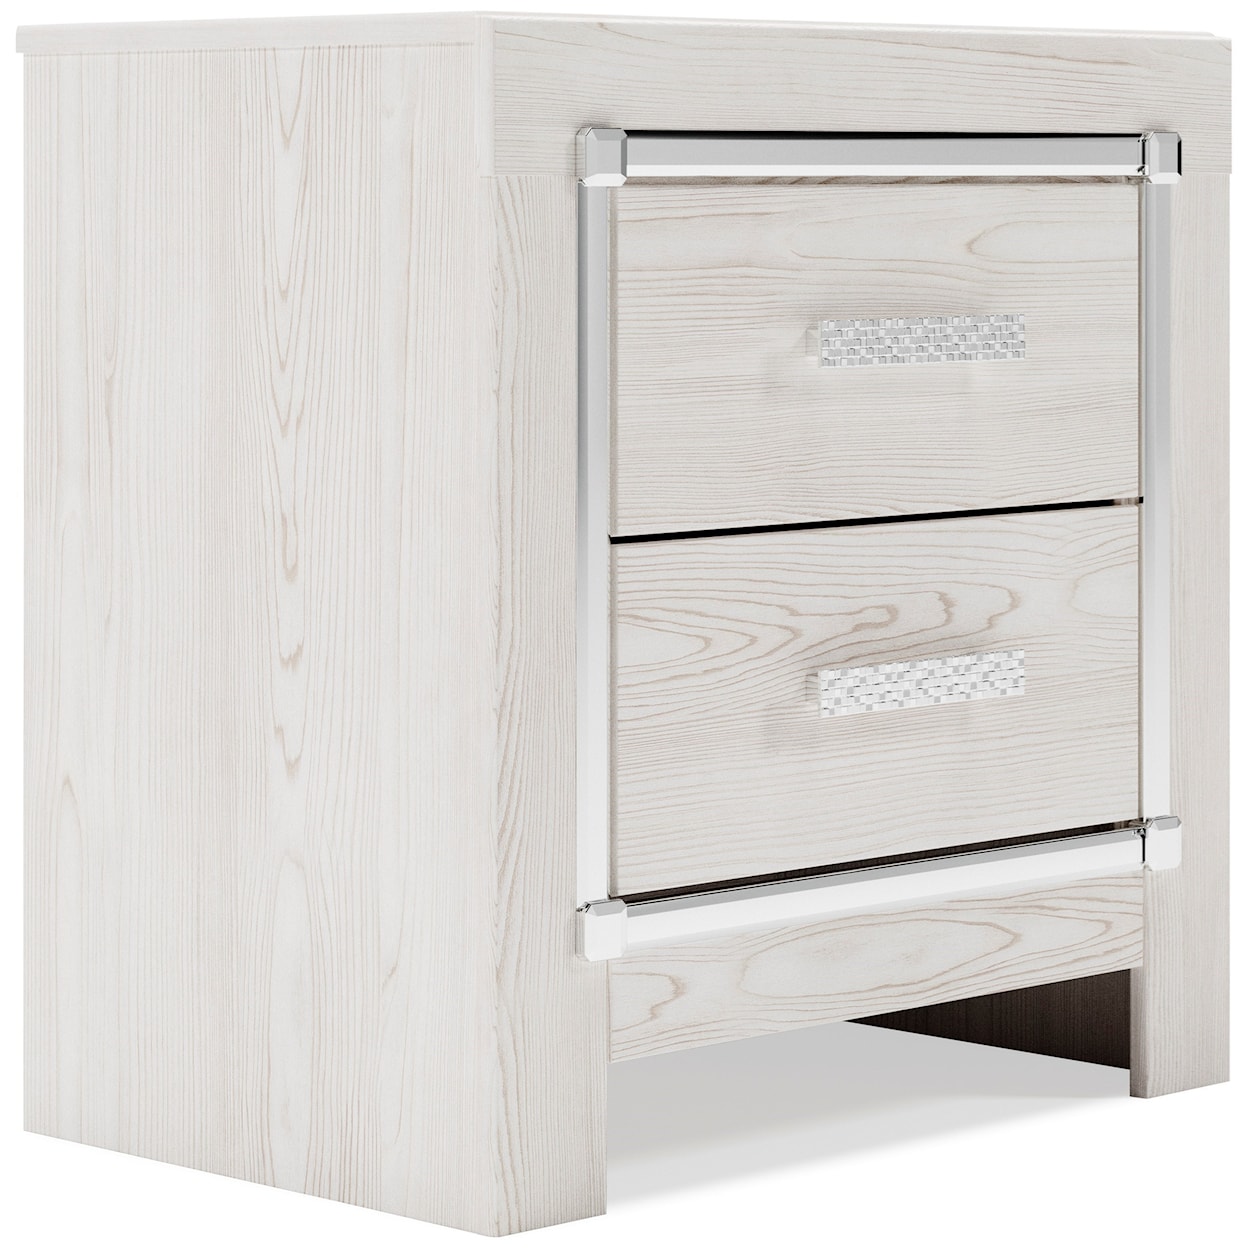 Ashley Furniture Signature Design Altyra 2-Drawer Nightstand